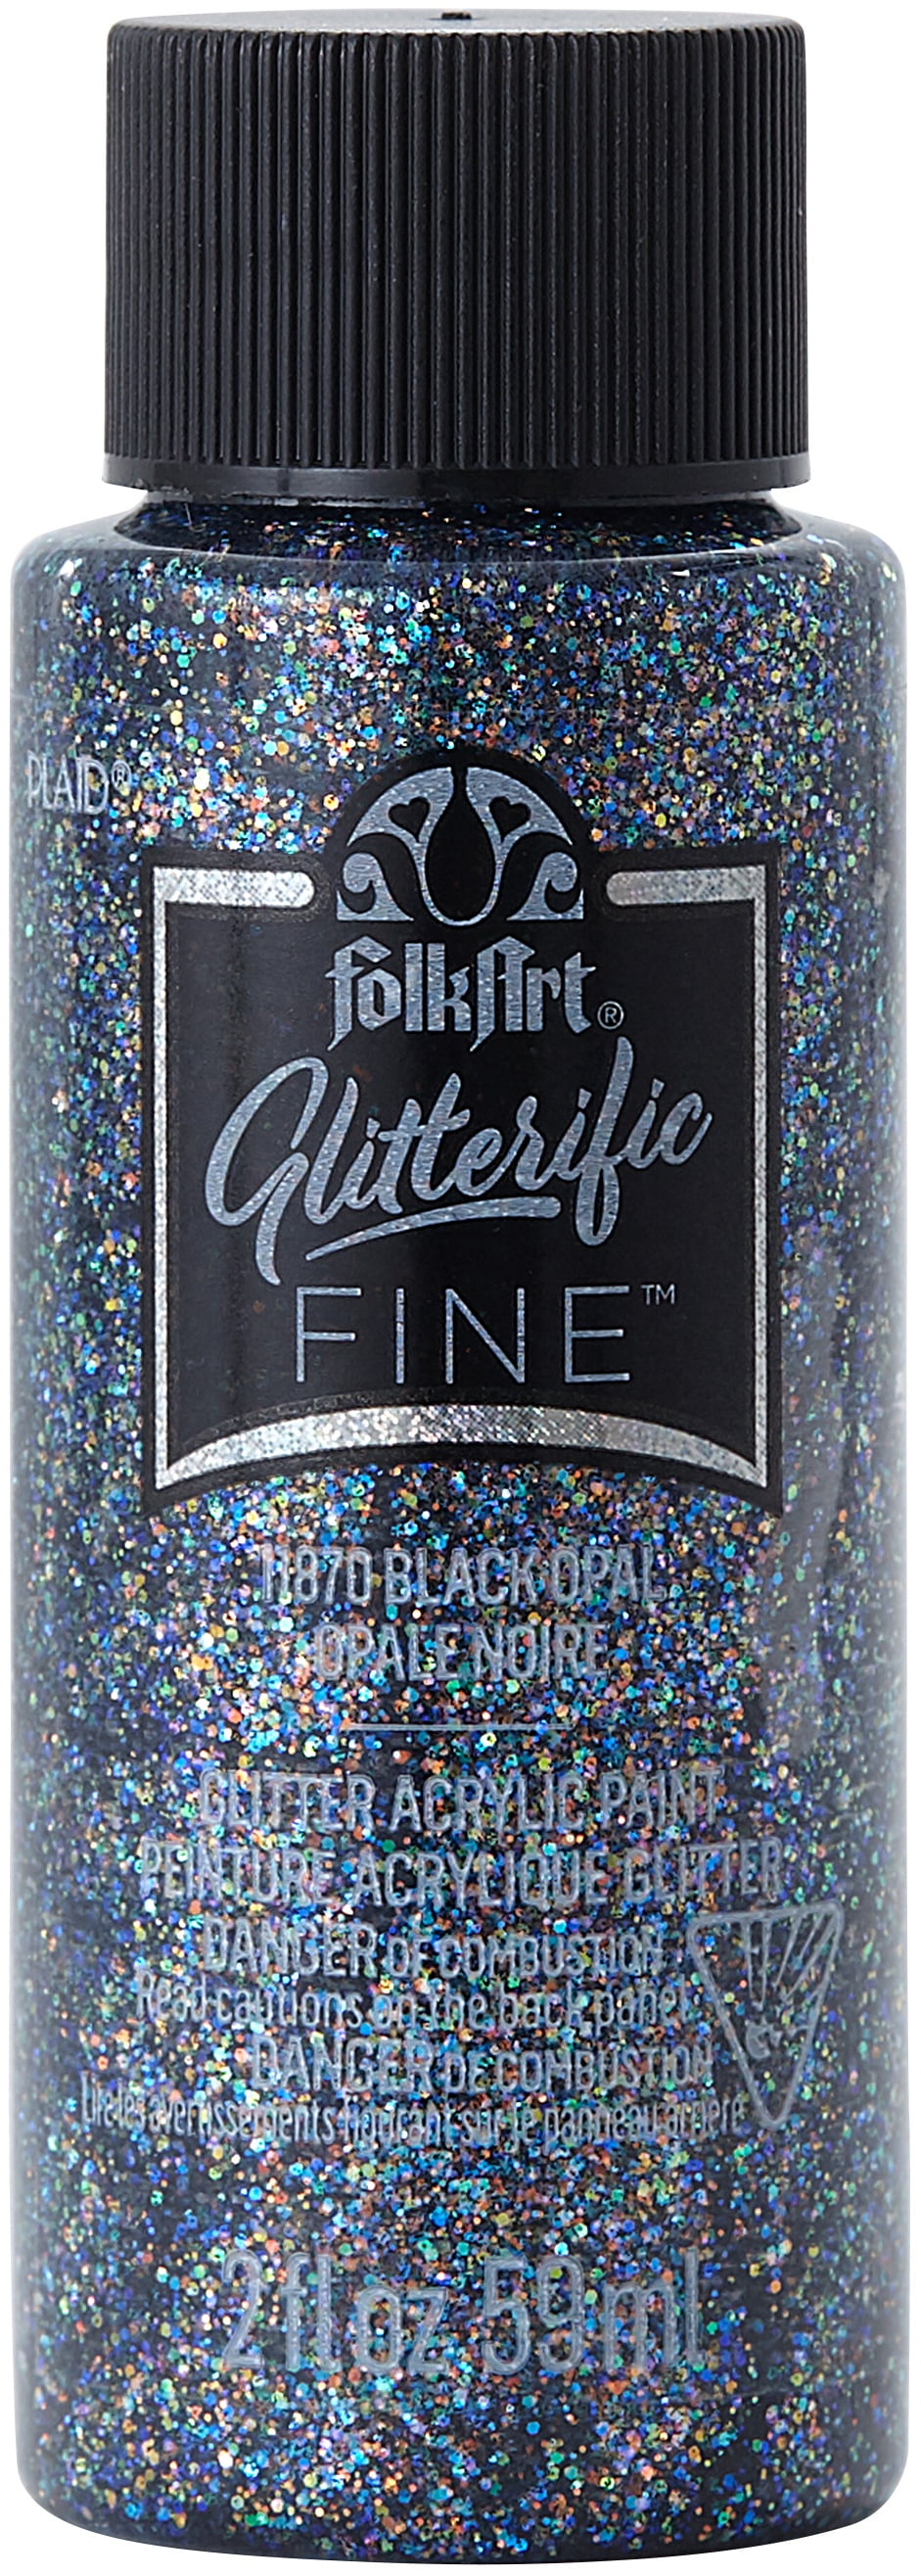 FolkArt Glitterific Fine Glitter Paint 2oz-Black Opal 